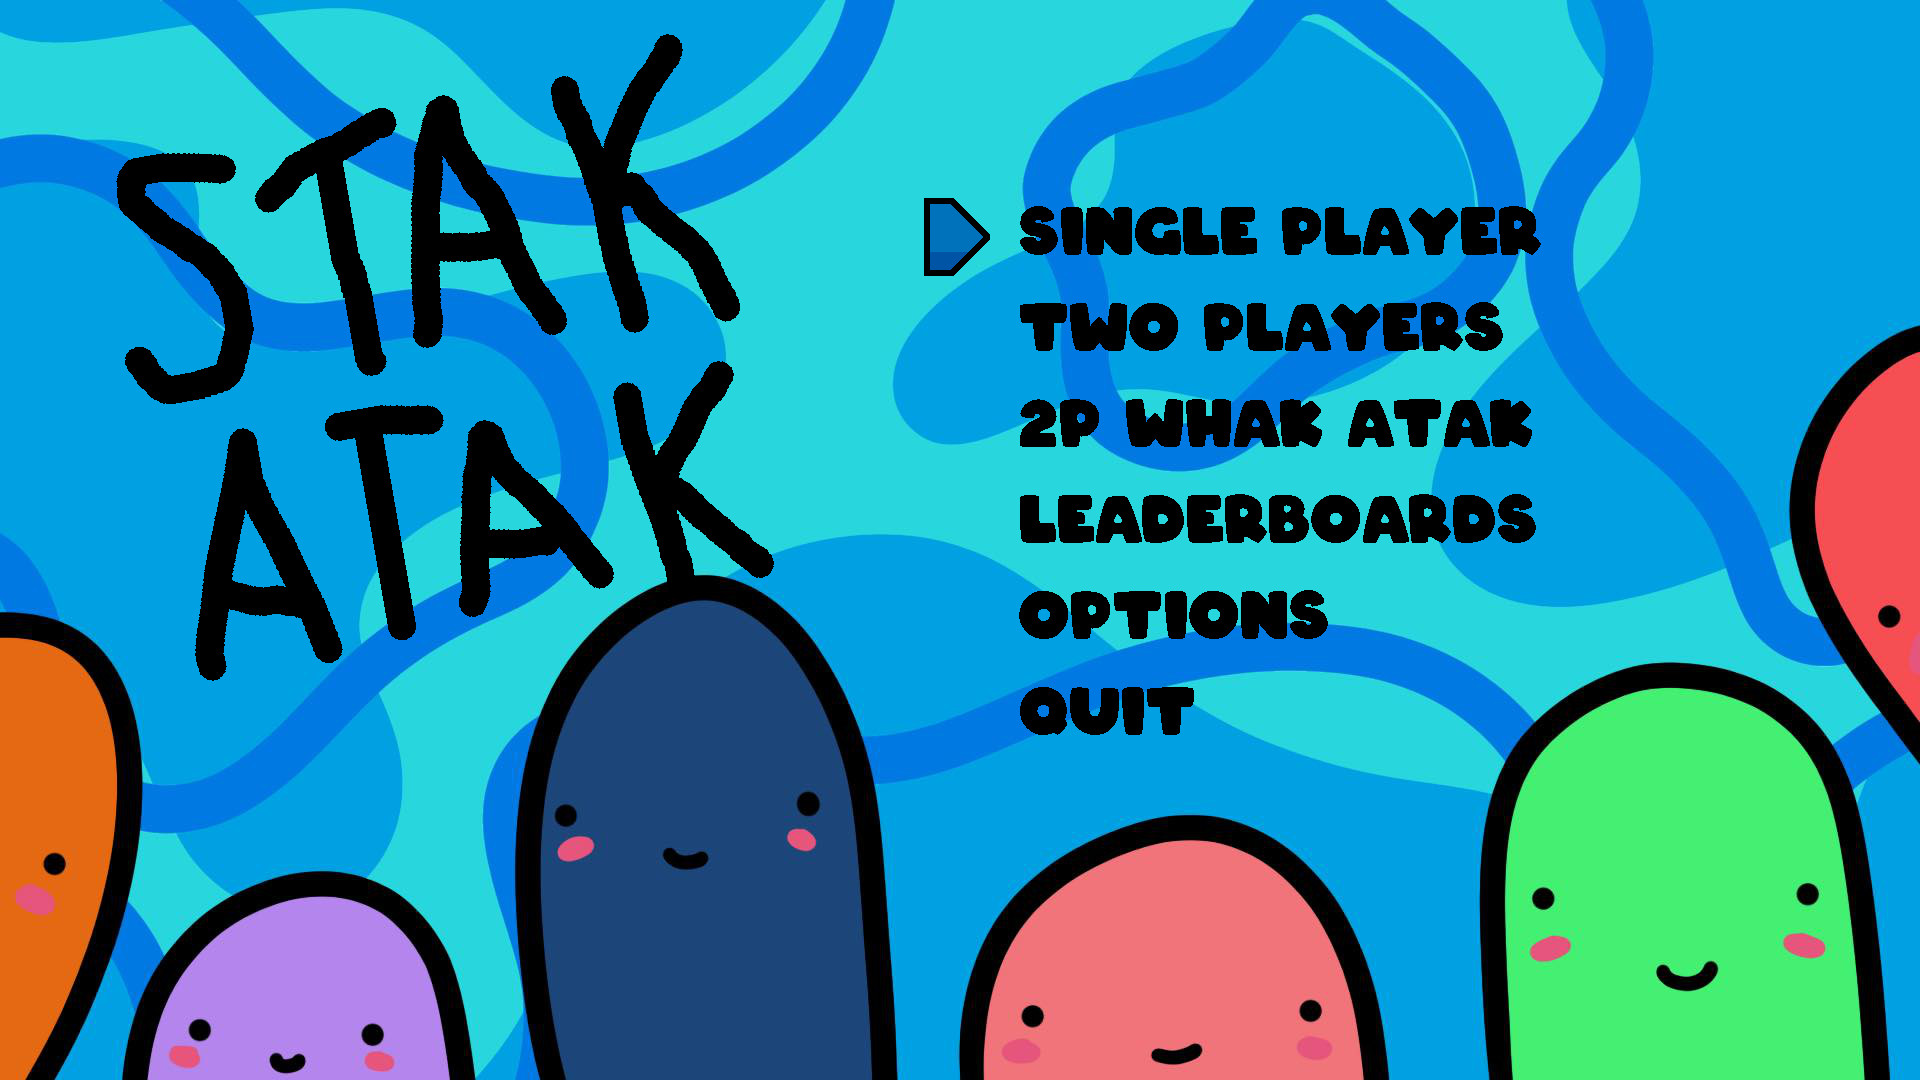 Stak Atak Featured Screenshot #1